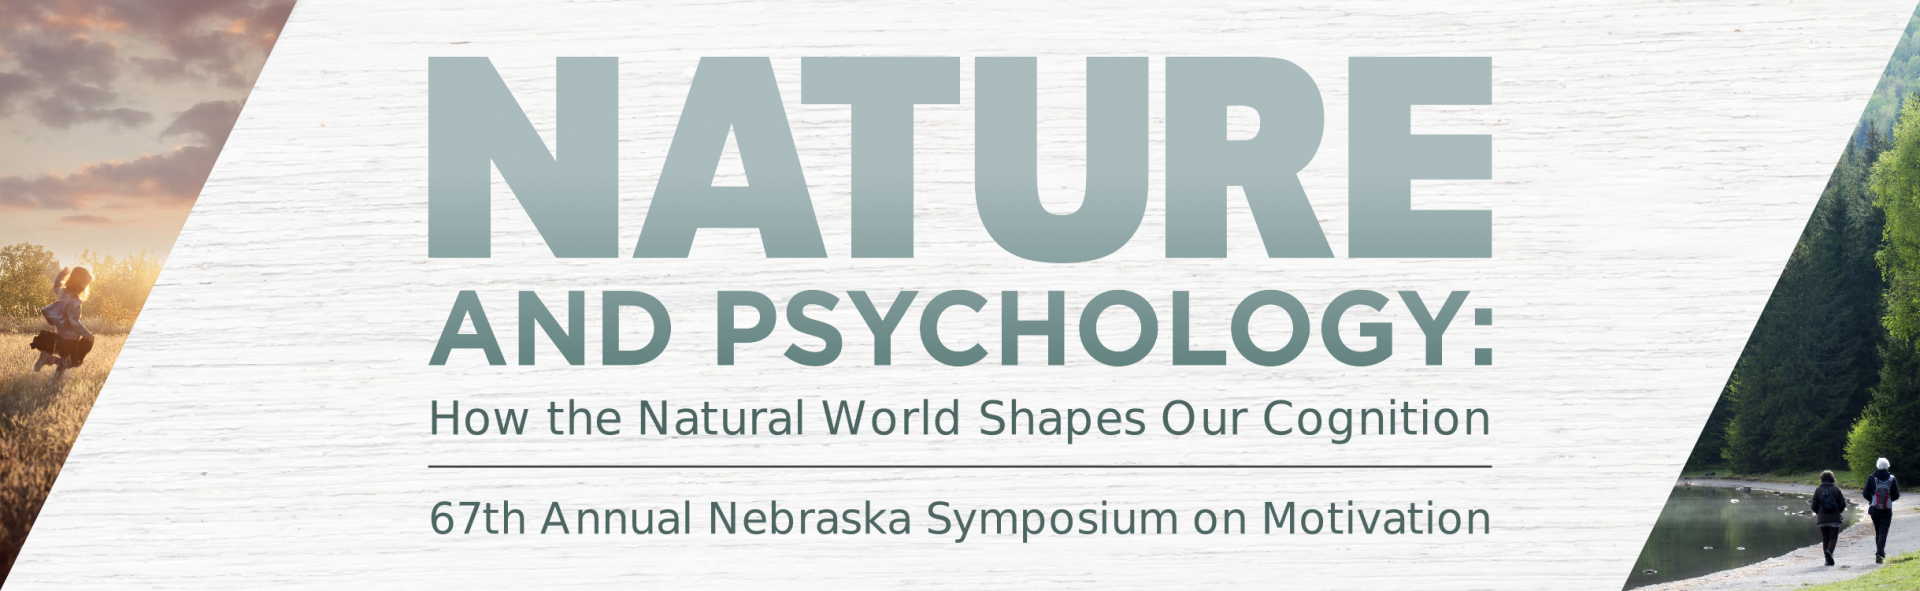 67th Annual Nebraska Symposium on Motivation